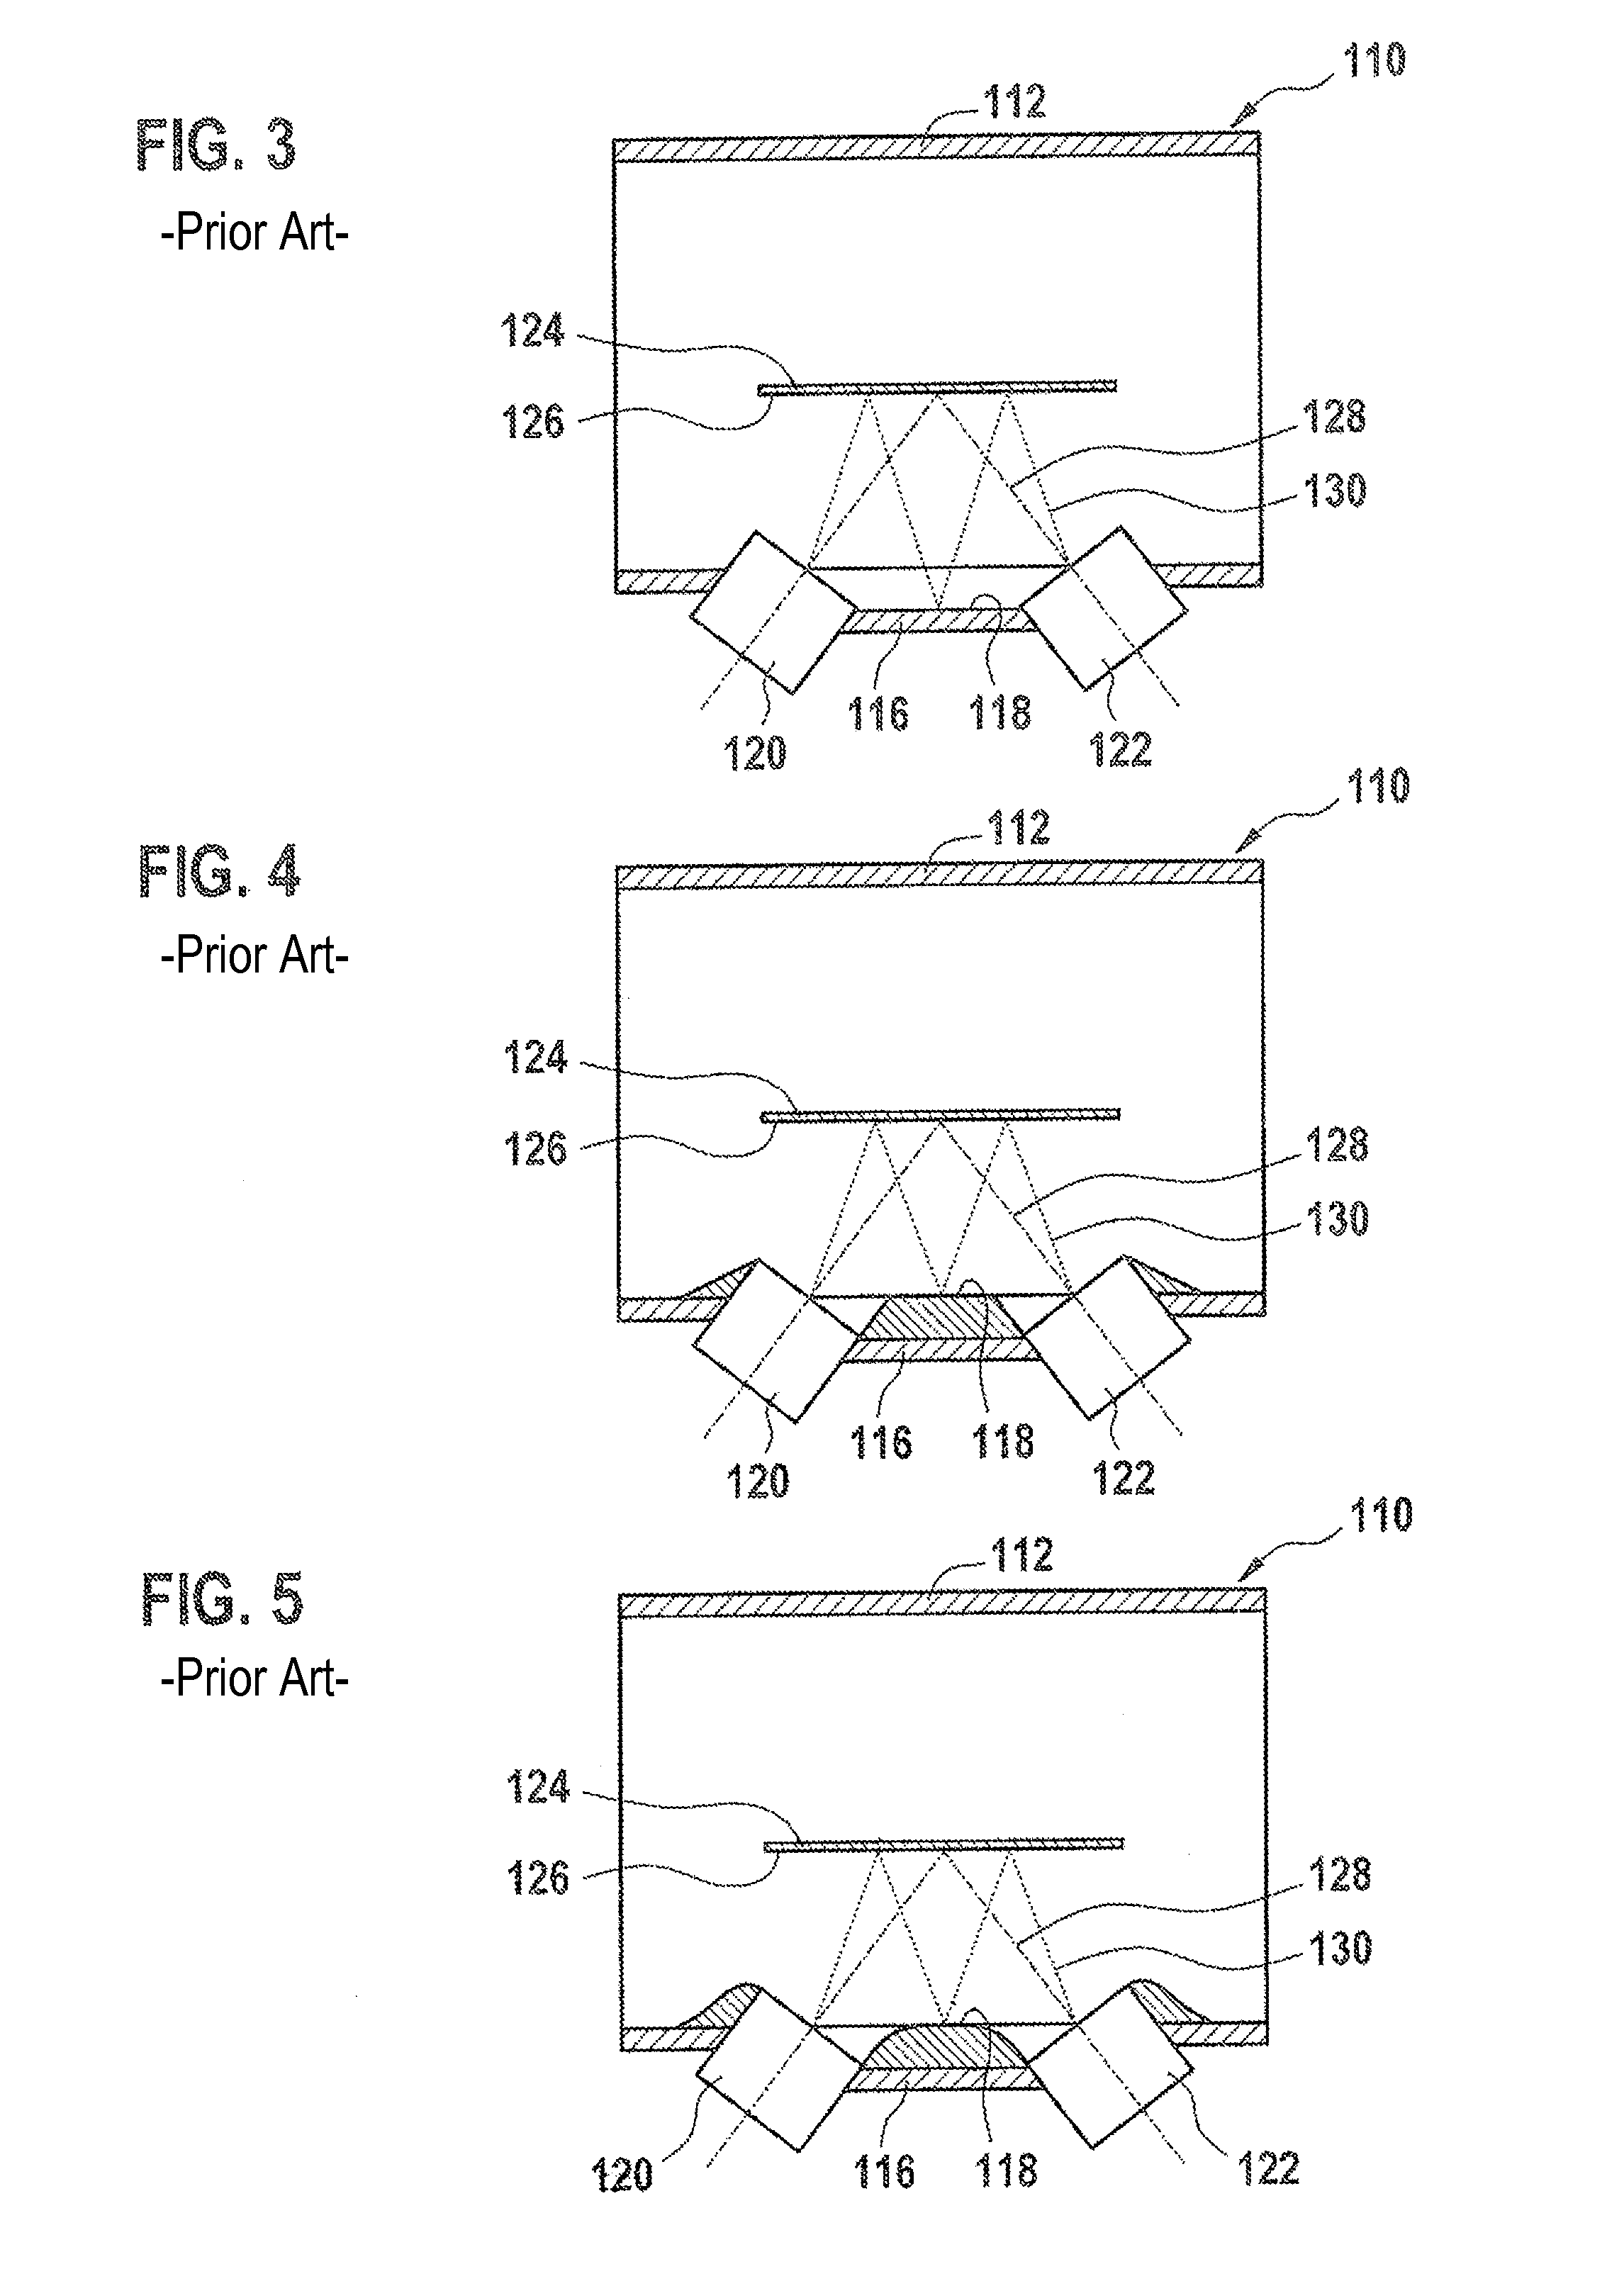 Ultrasonic flow sensor for use in a fluid medium